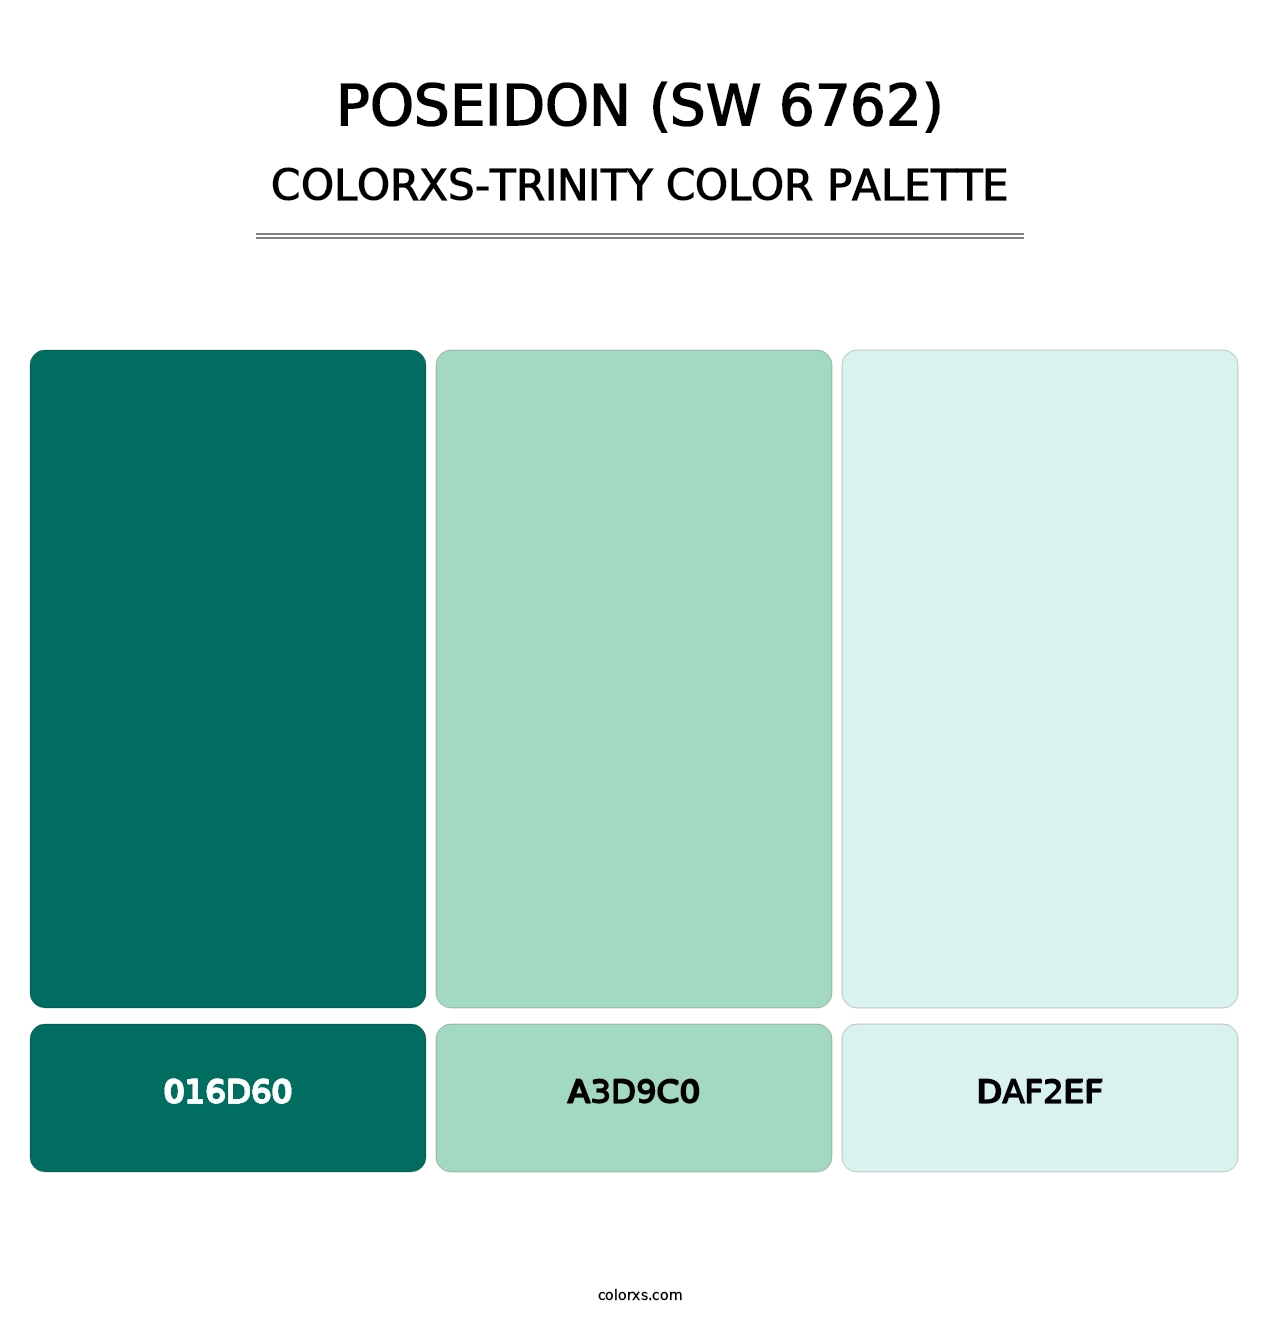 Poseidon (SW 6762) - Colorxs Trinity Palette